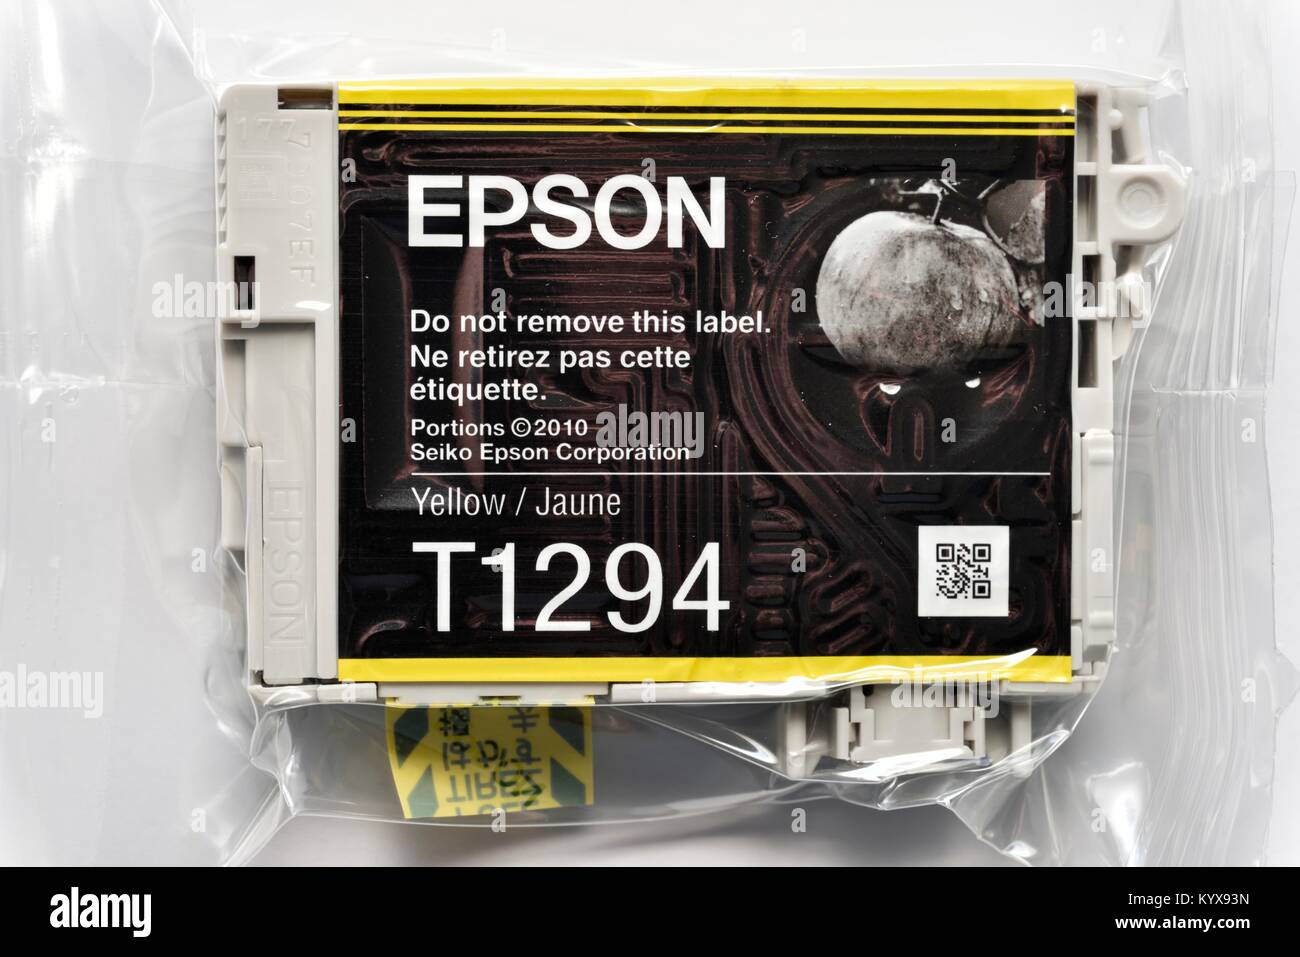 Epson T1294 yellow ink cartridge Stock Photo - Alamy